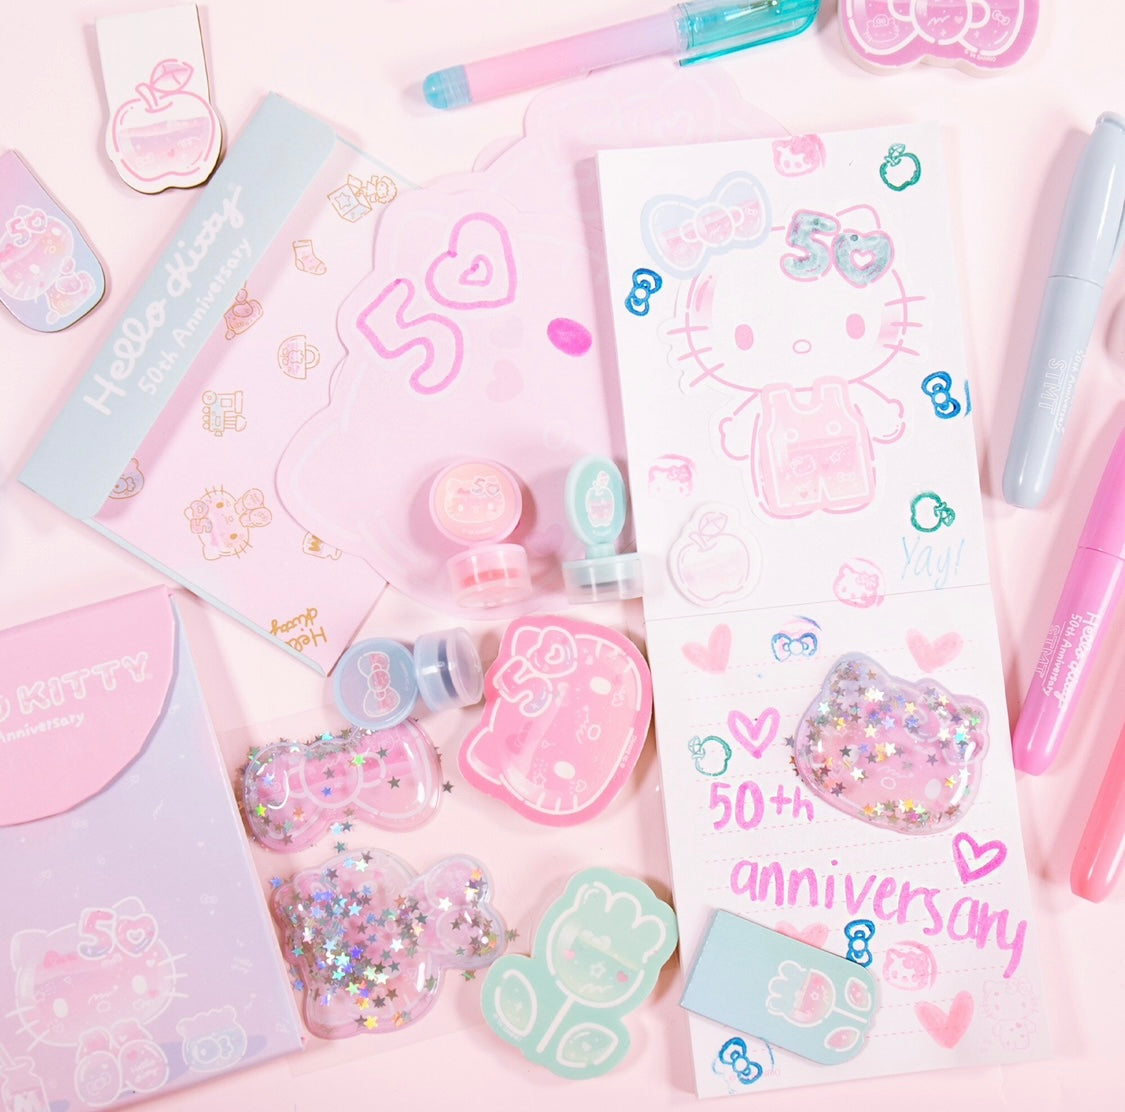 Hello Kitty Mini Collectible Stationery Set